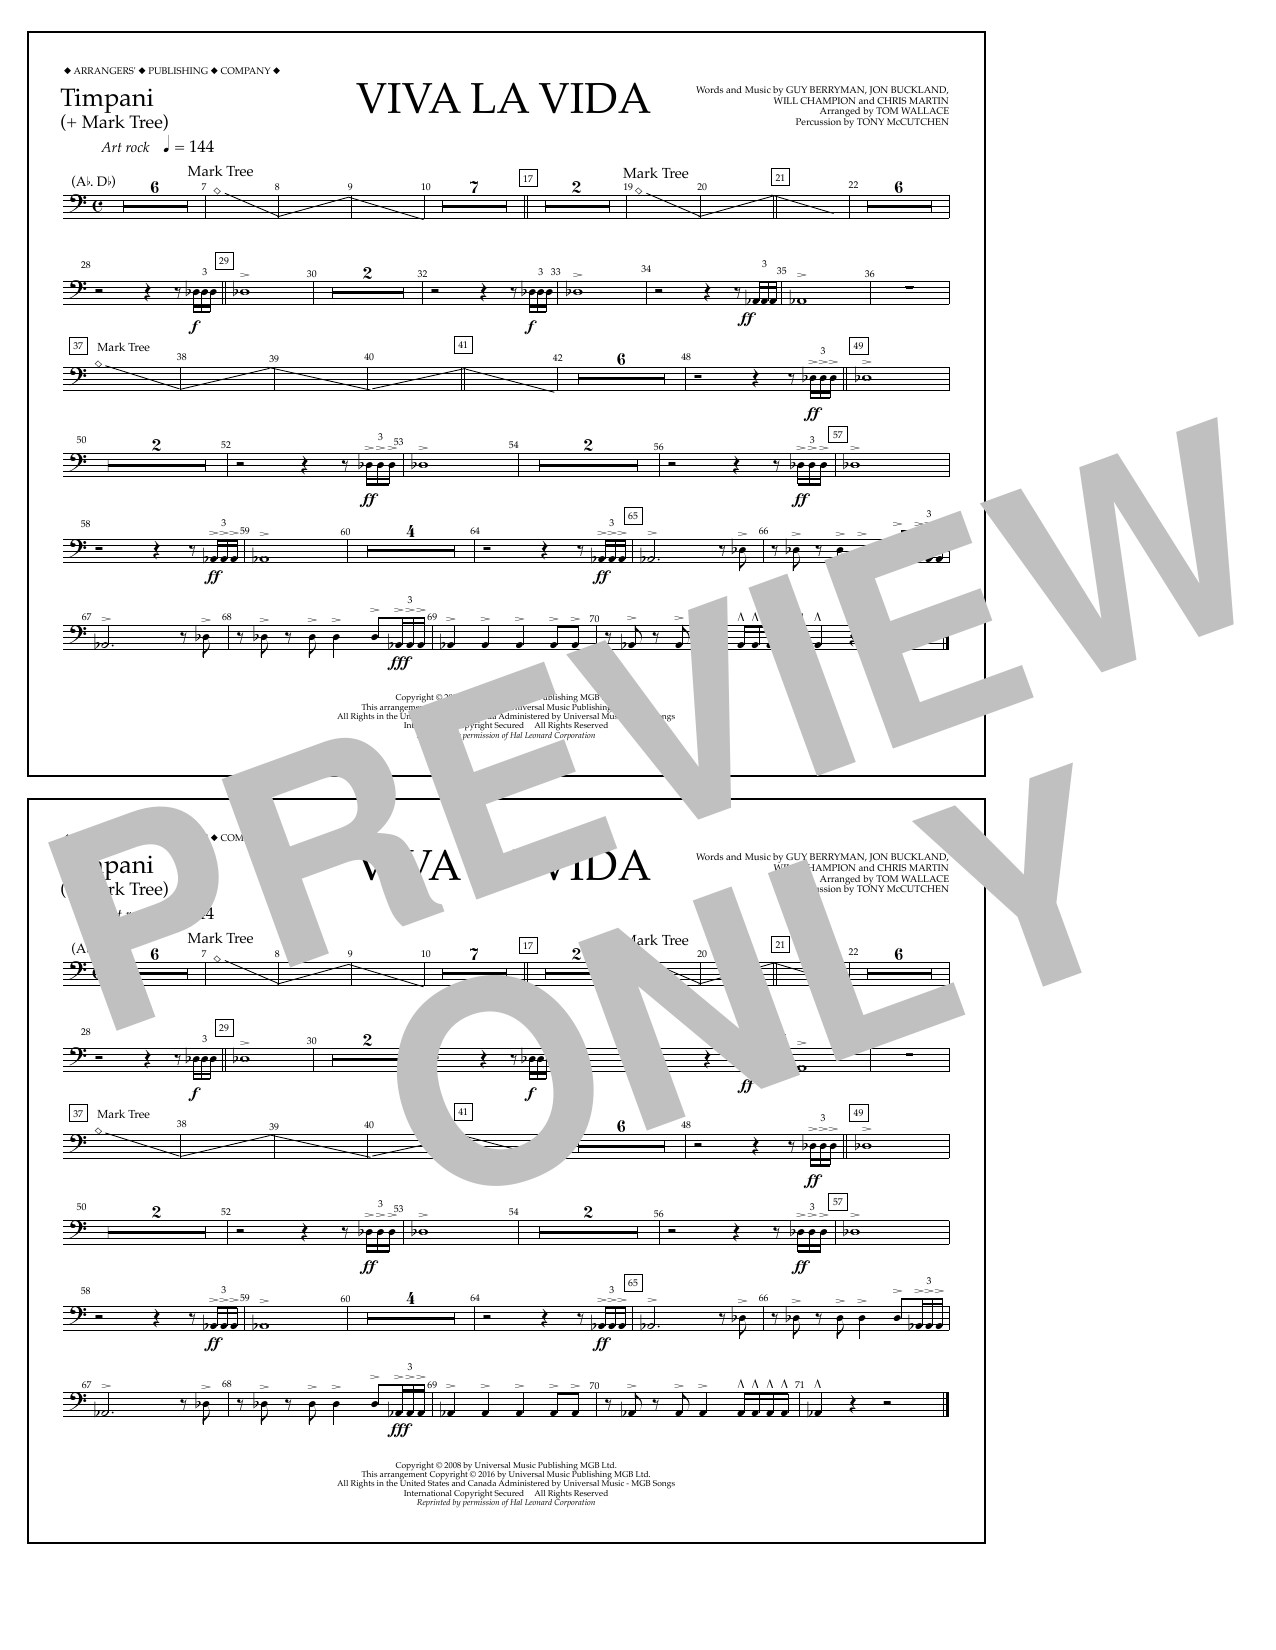 Tom Wallace Viva La Vida - Timpani Sheet Music Notes & Chords for Marching Band - Download or Print PDF